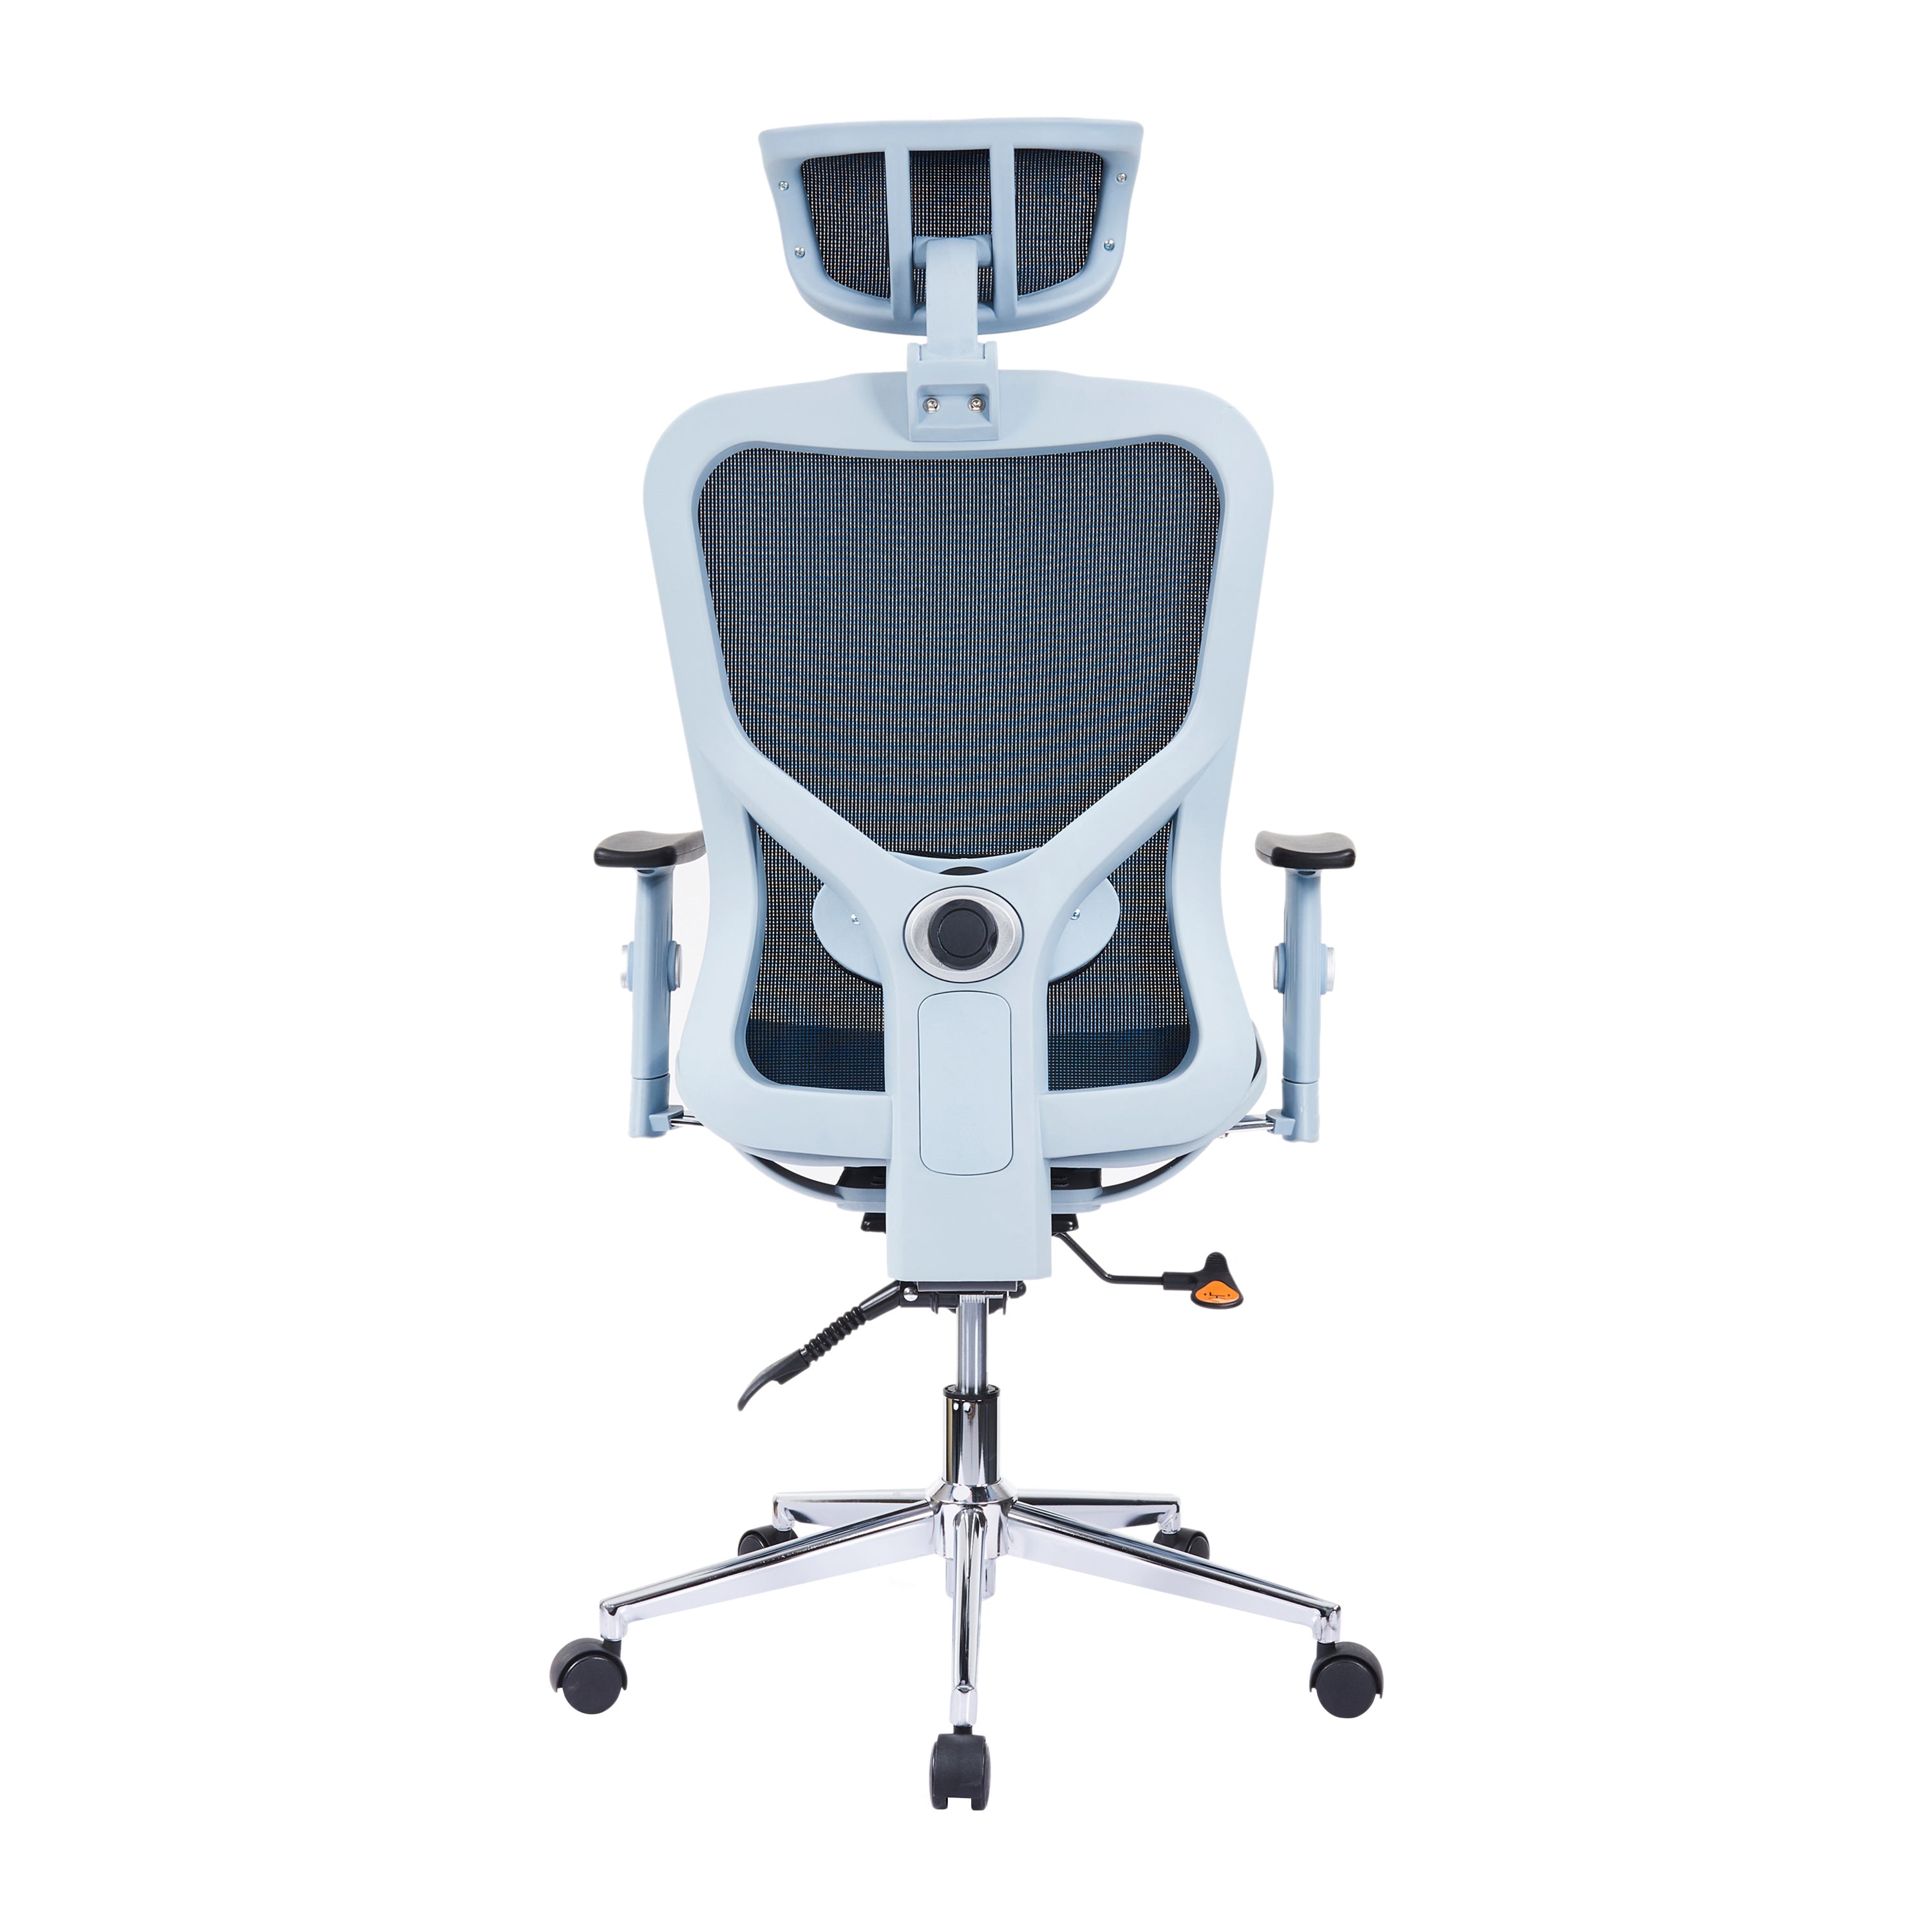 Tatub Mesh Ergonomic Office Chair Lumbar Support, High Back Mesh Computer  Chair with Adjustable Headrest 